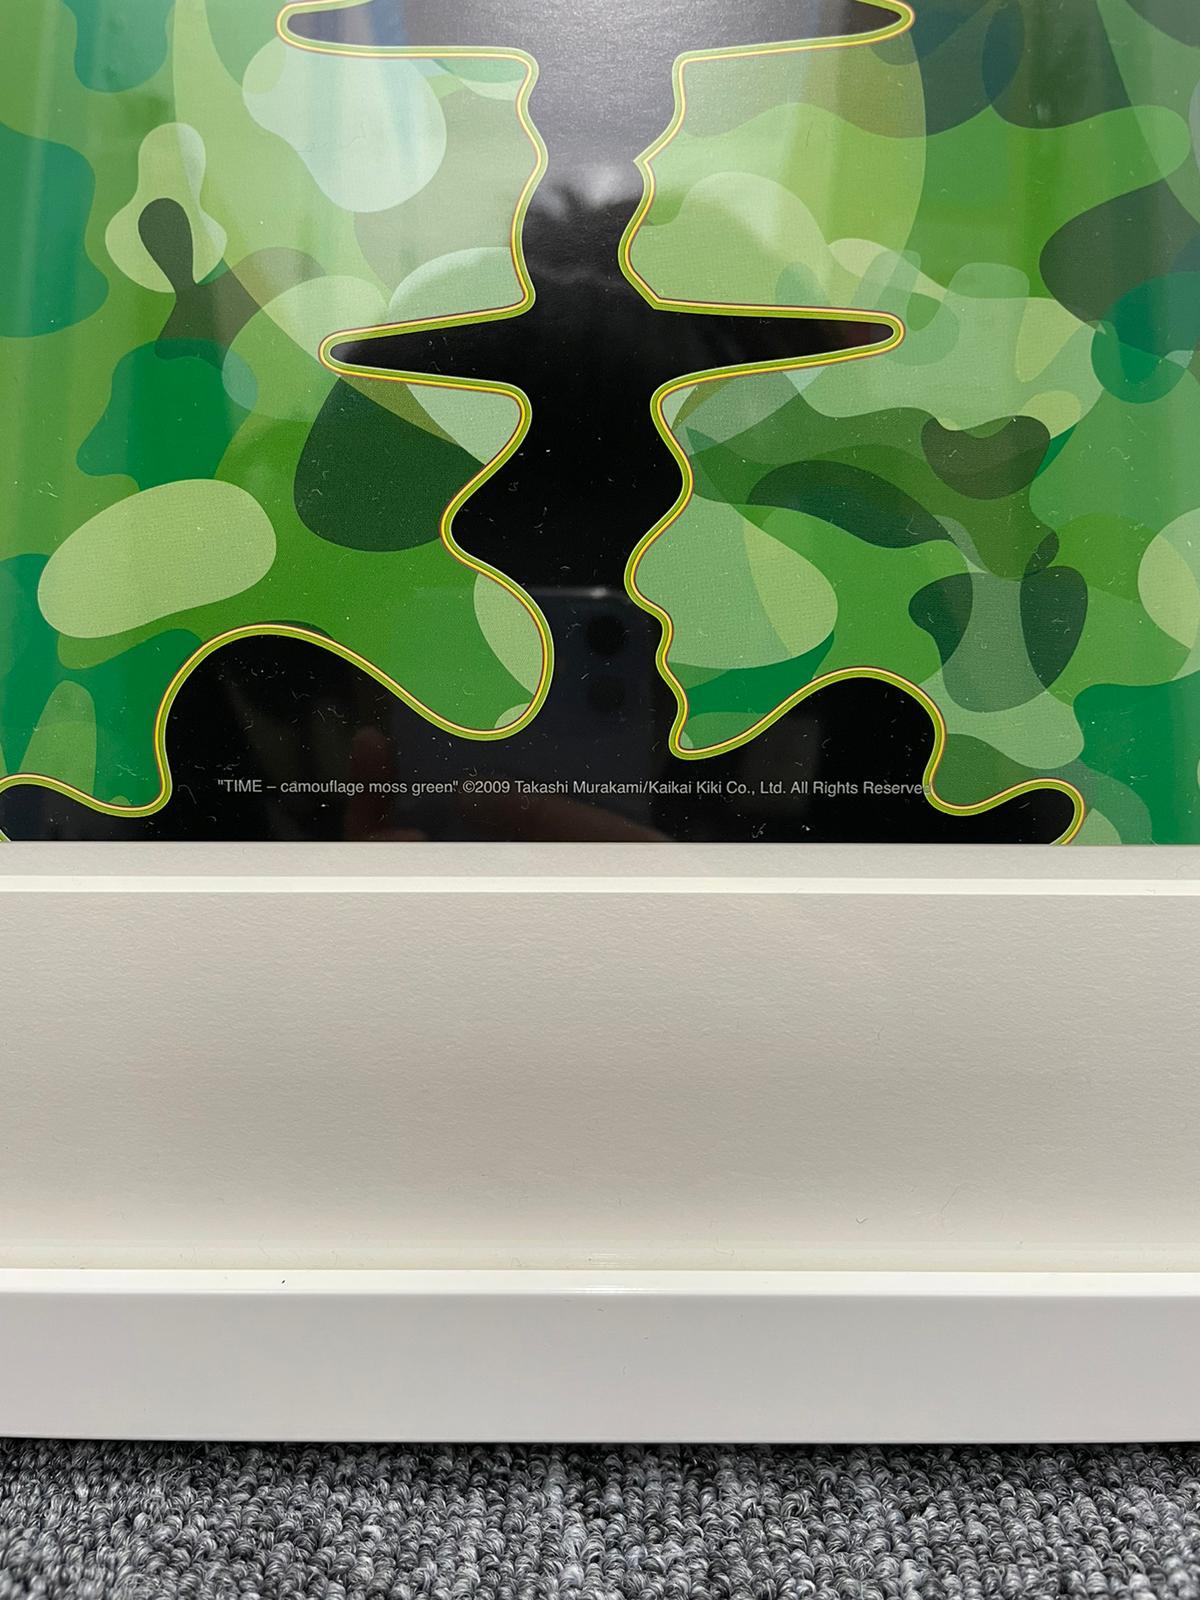 Time Bokan, camouflage moss green. Limited Edition (print) by Takashi Murakami 2